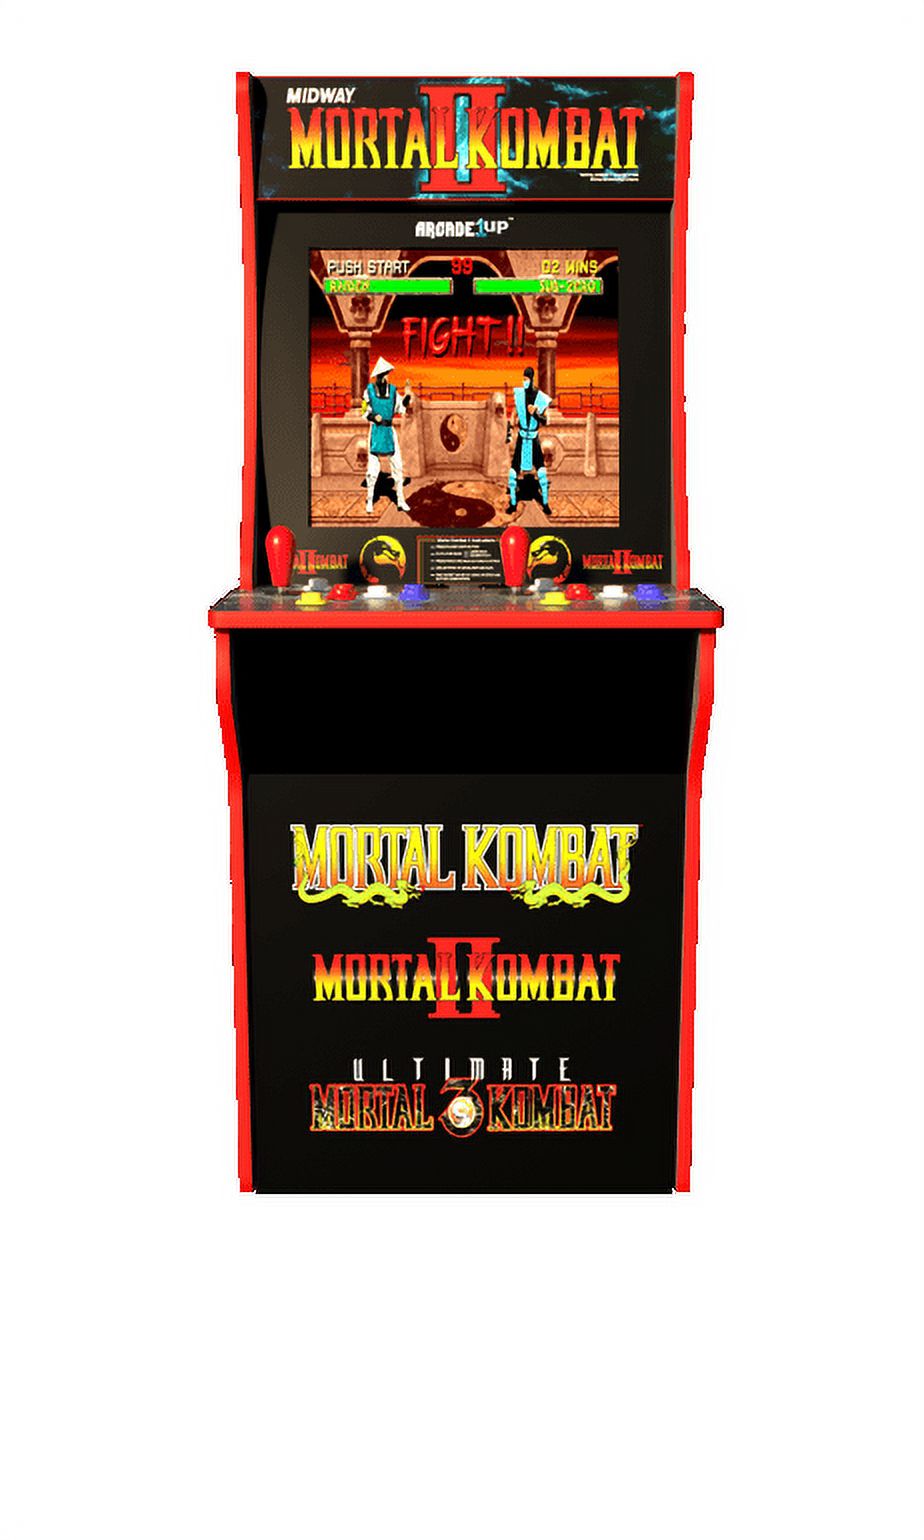 Mortal Kombat Arcade Machine w/ Riser, Arcade1UP (Includes Mortal Kombat I, II, III) - image 2 of 5